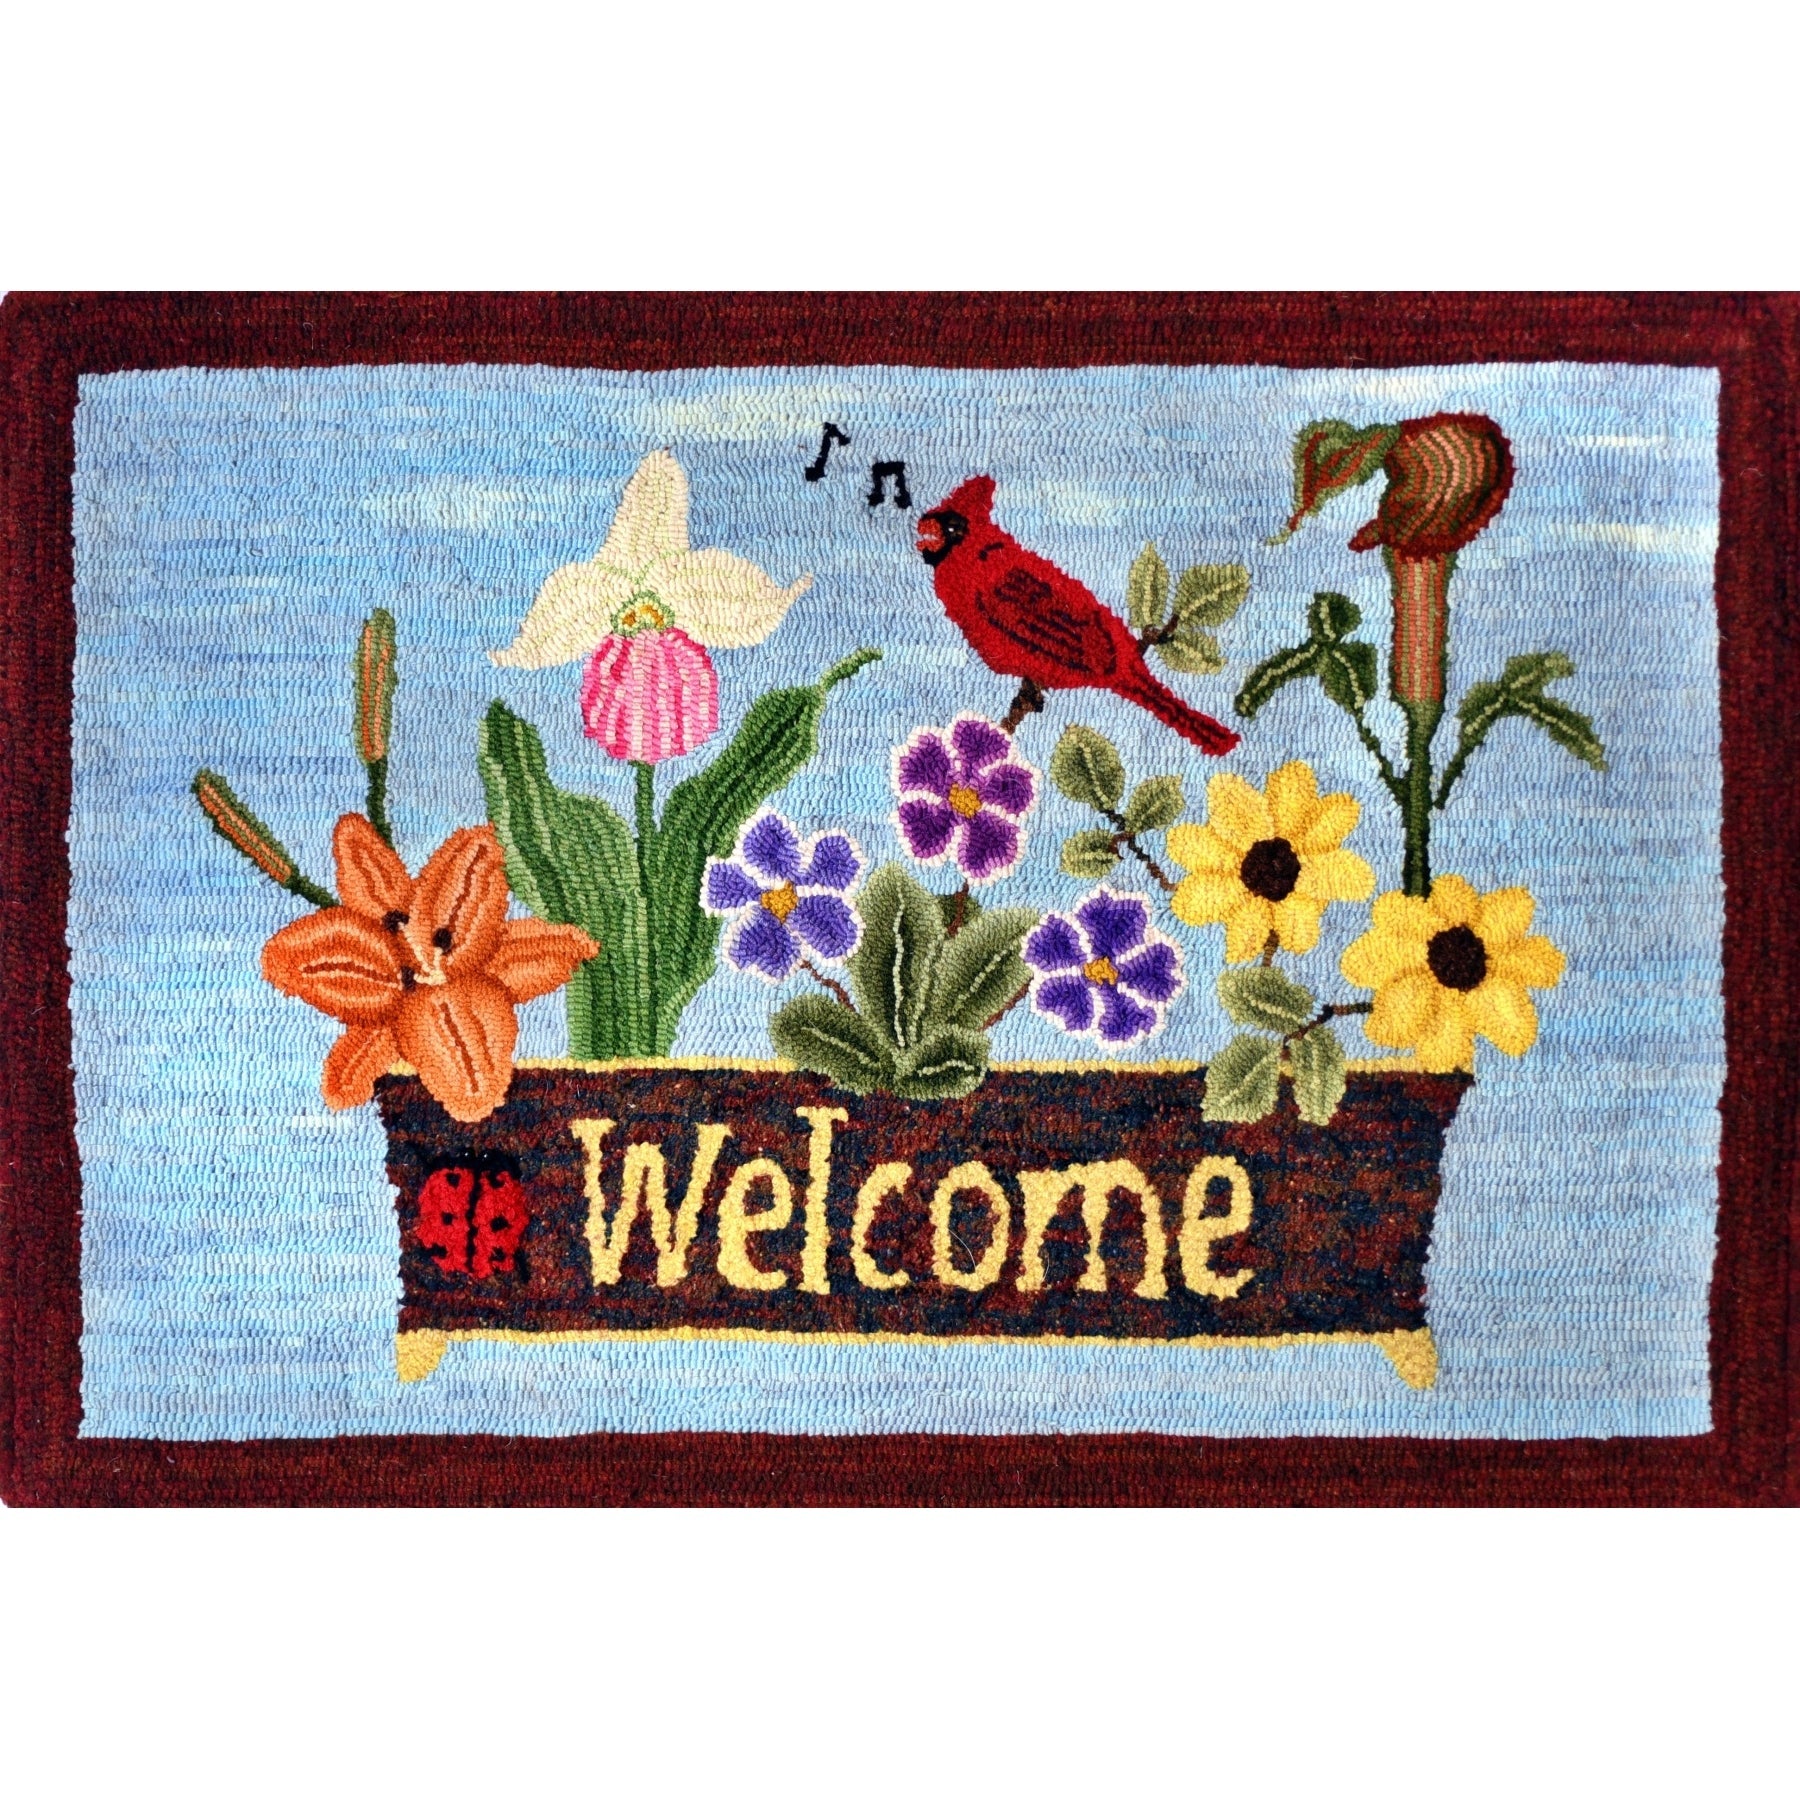 Welcome, rug hooked by John Leonard